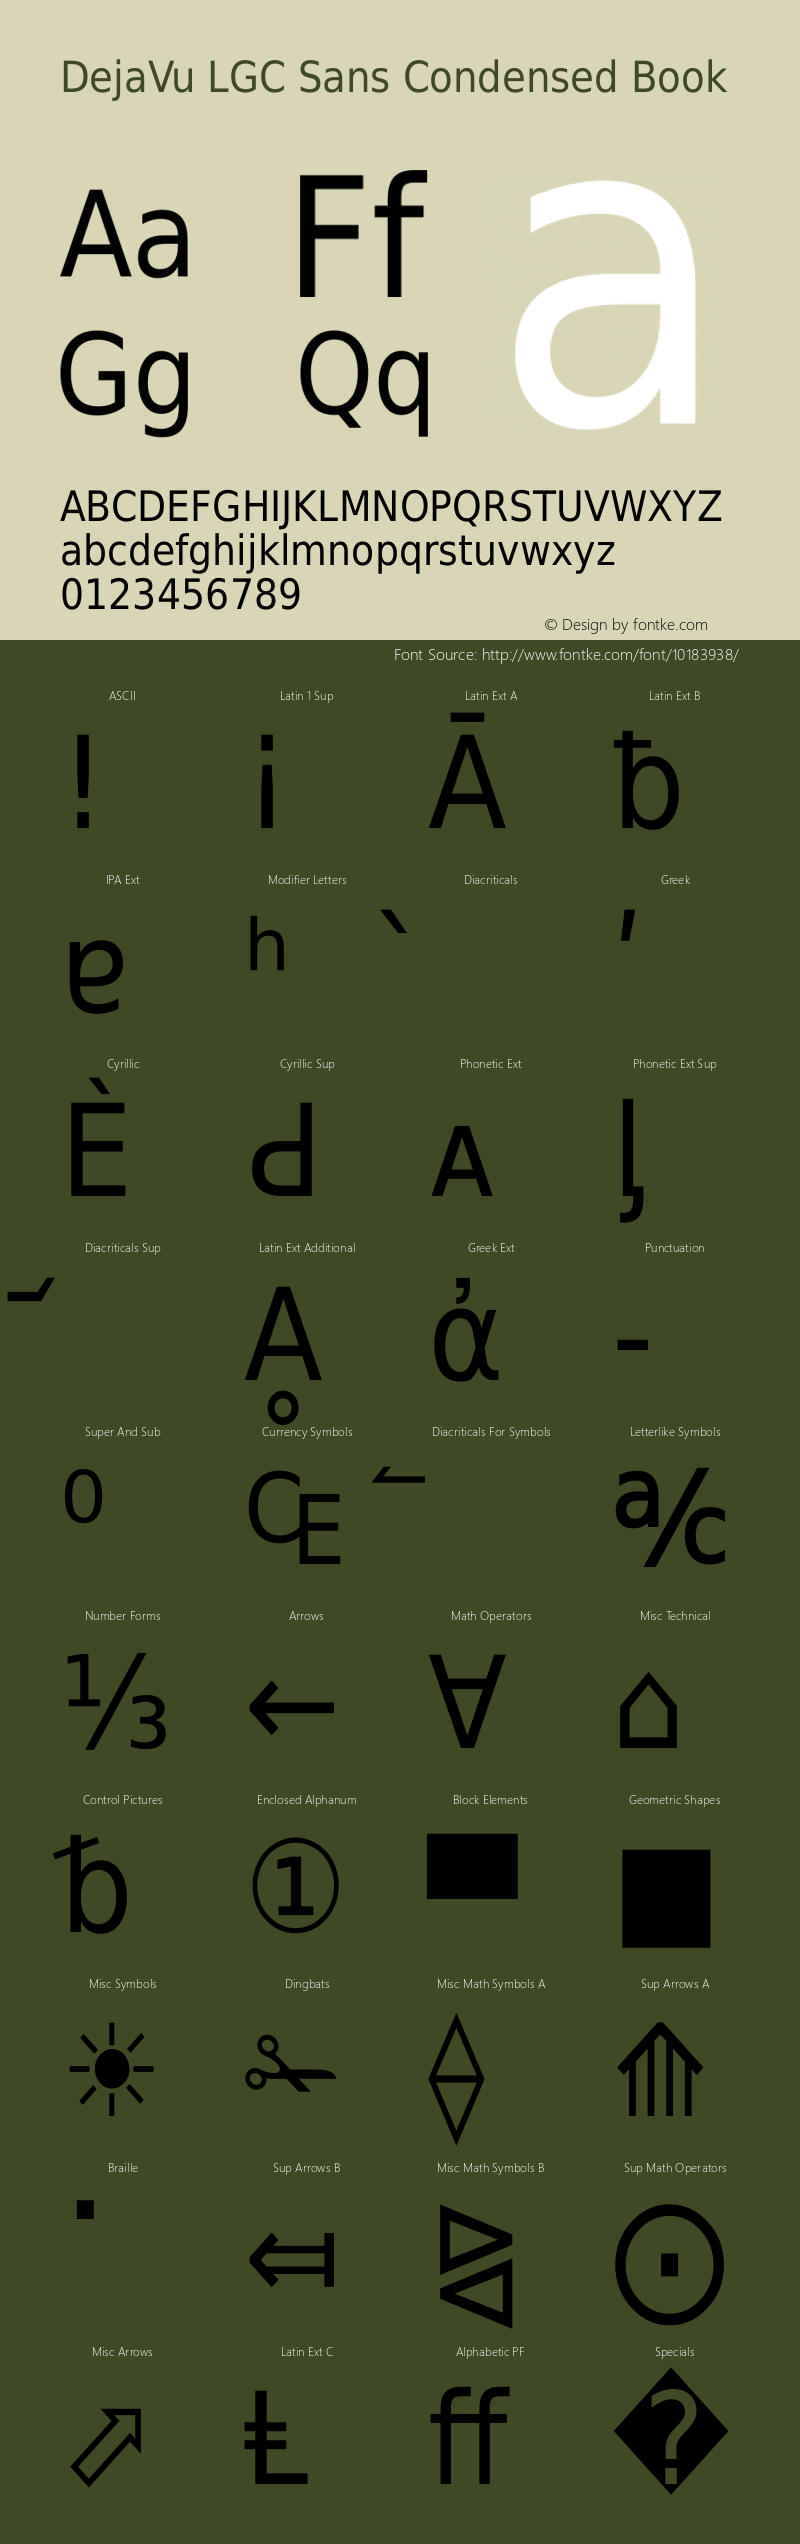 DejaVu LGC Sans Condensed Book Version 2.14 Font Sample